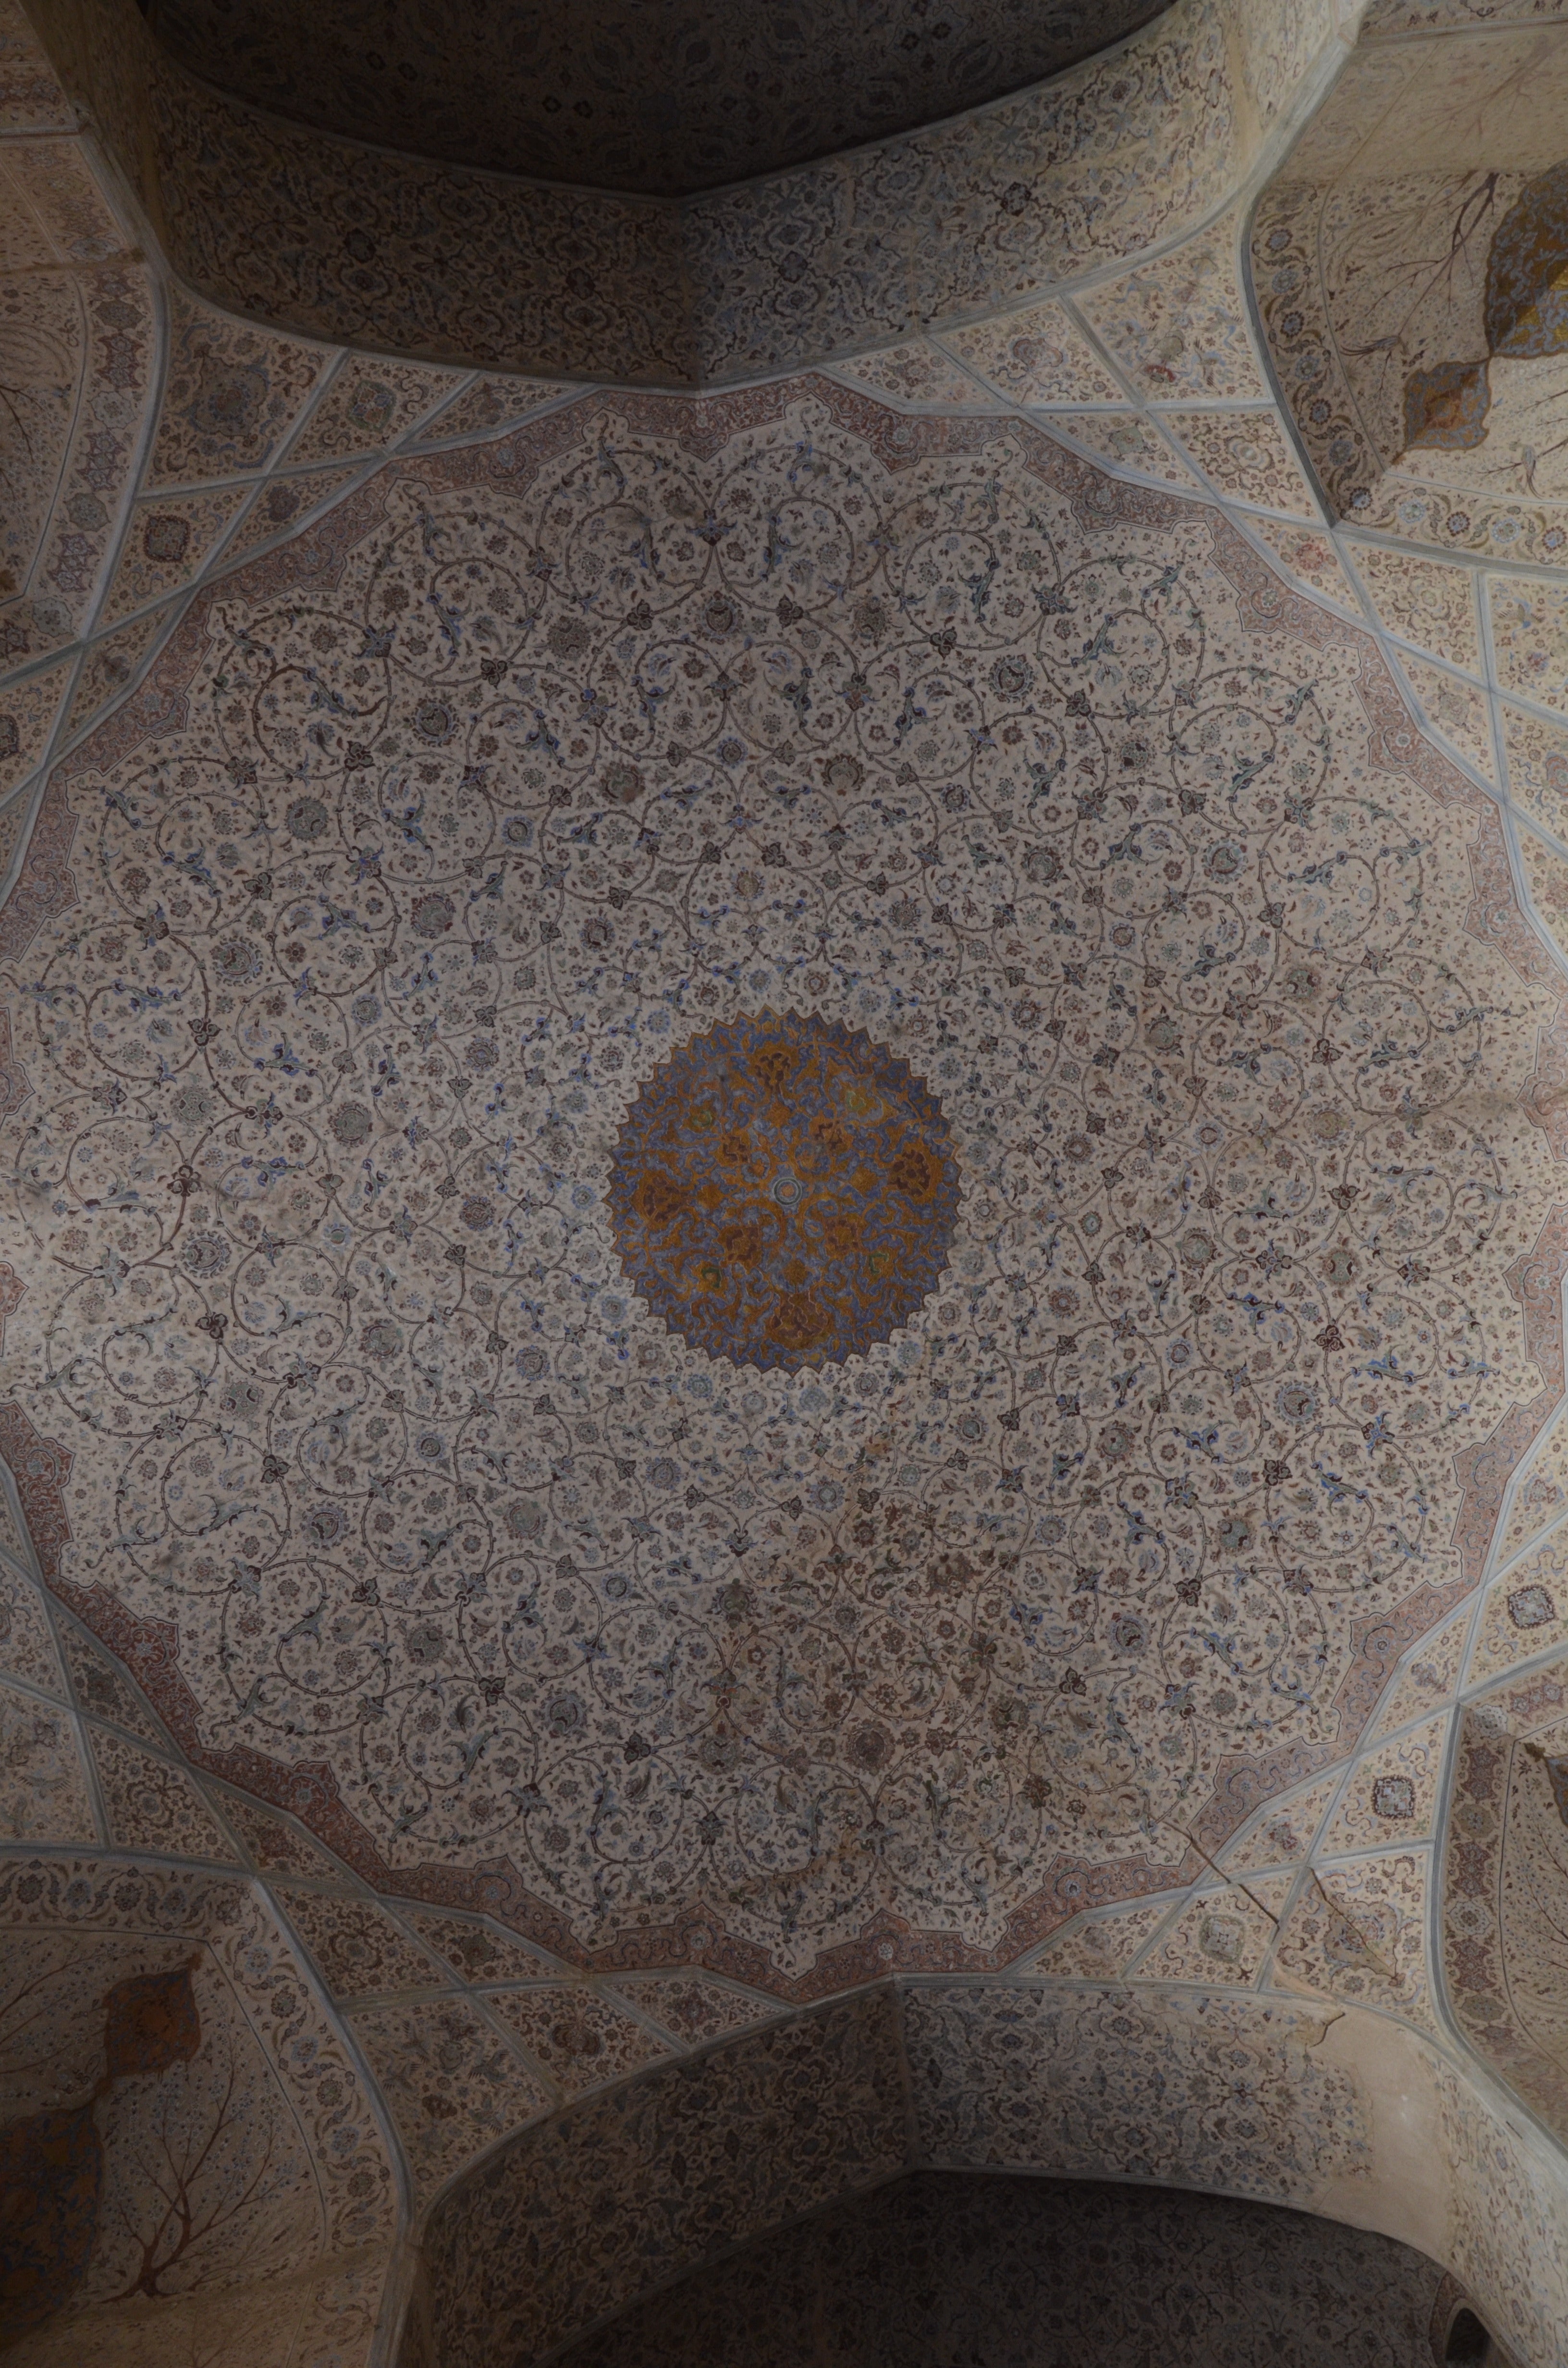 The Dome of Ali Qapu